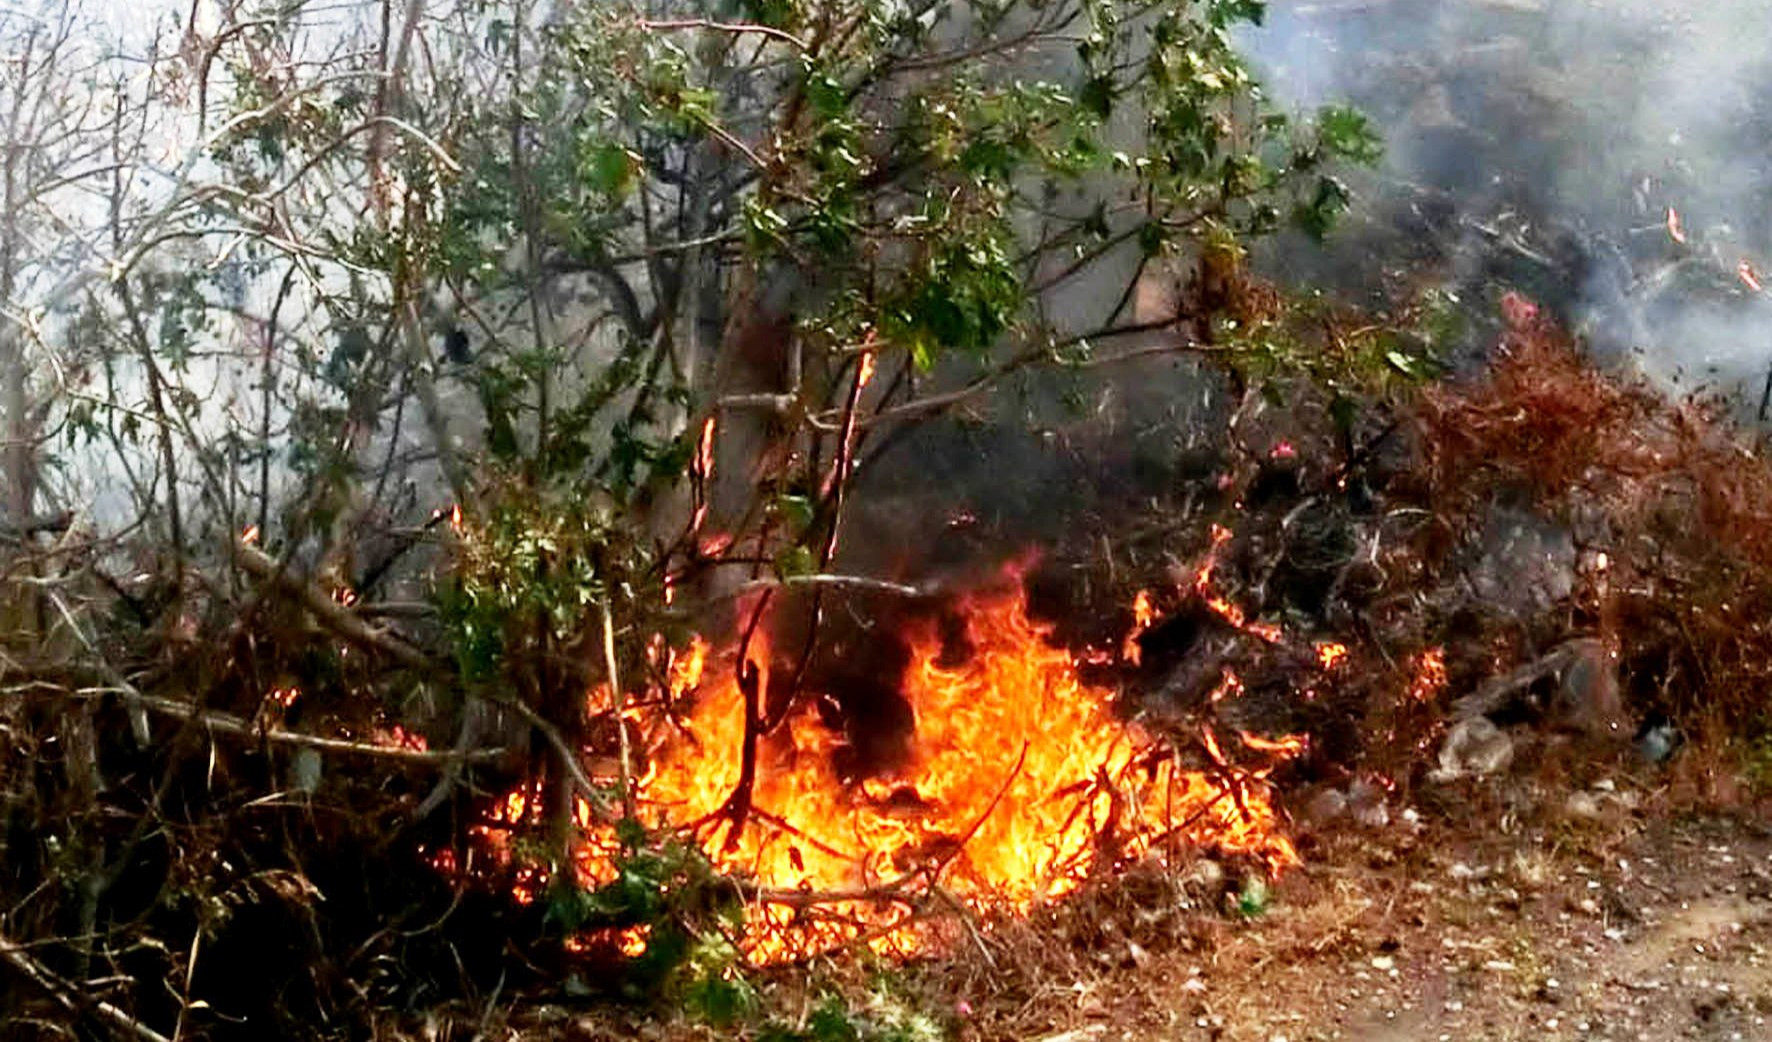 Incendio sterpaglie in zona impervia in valle Armea